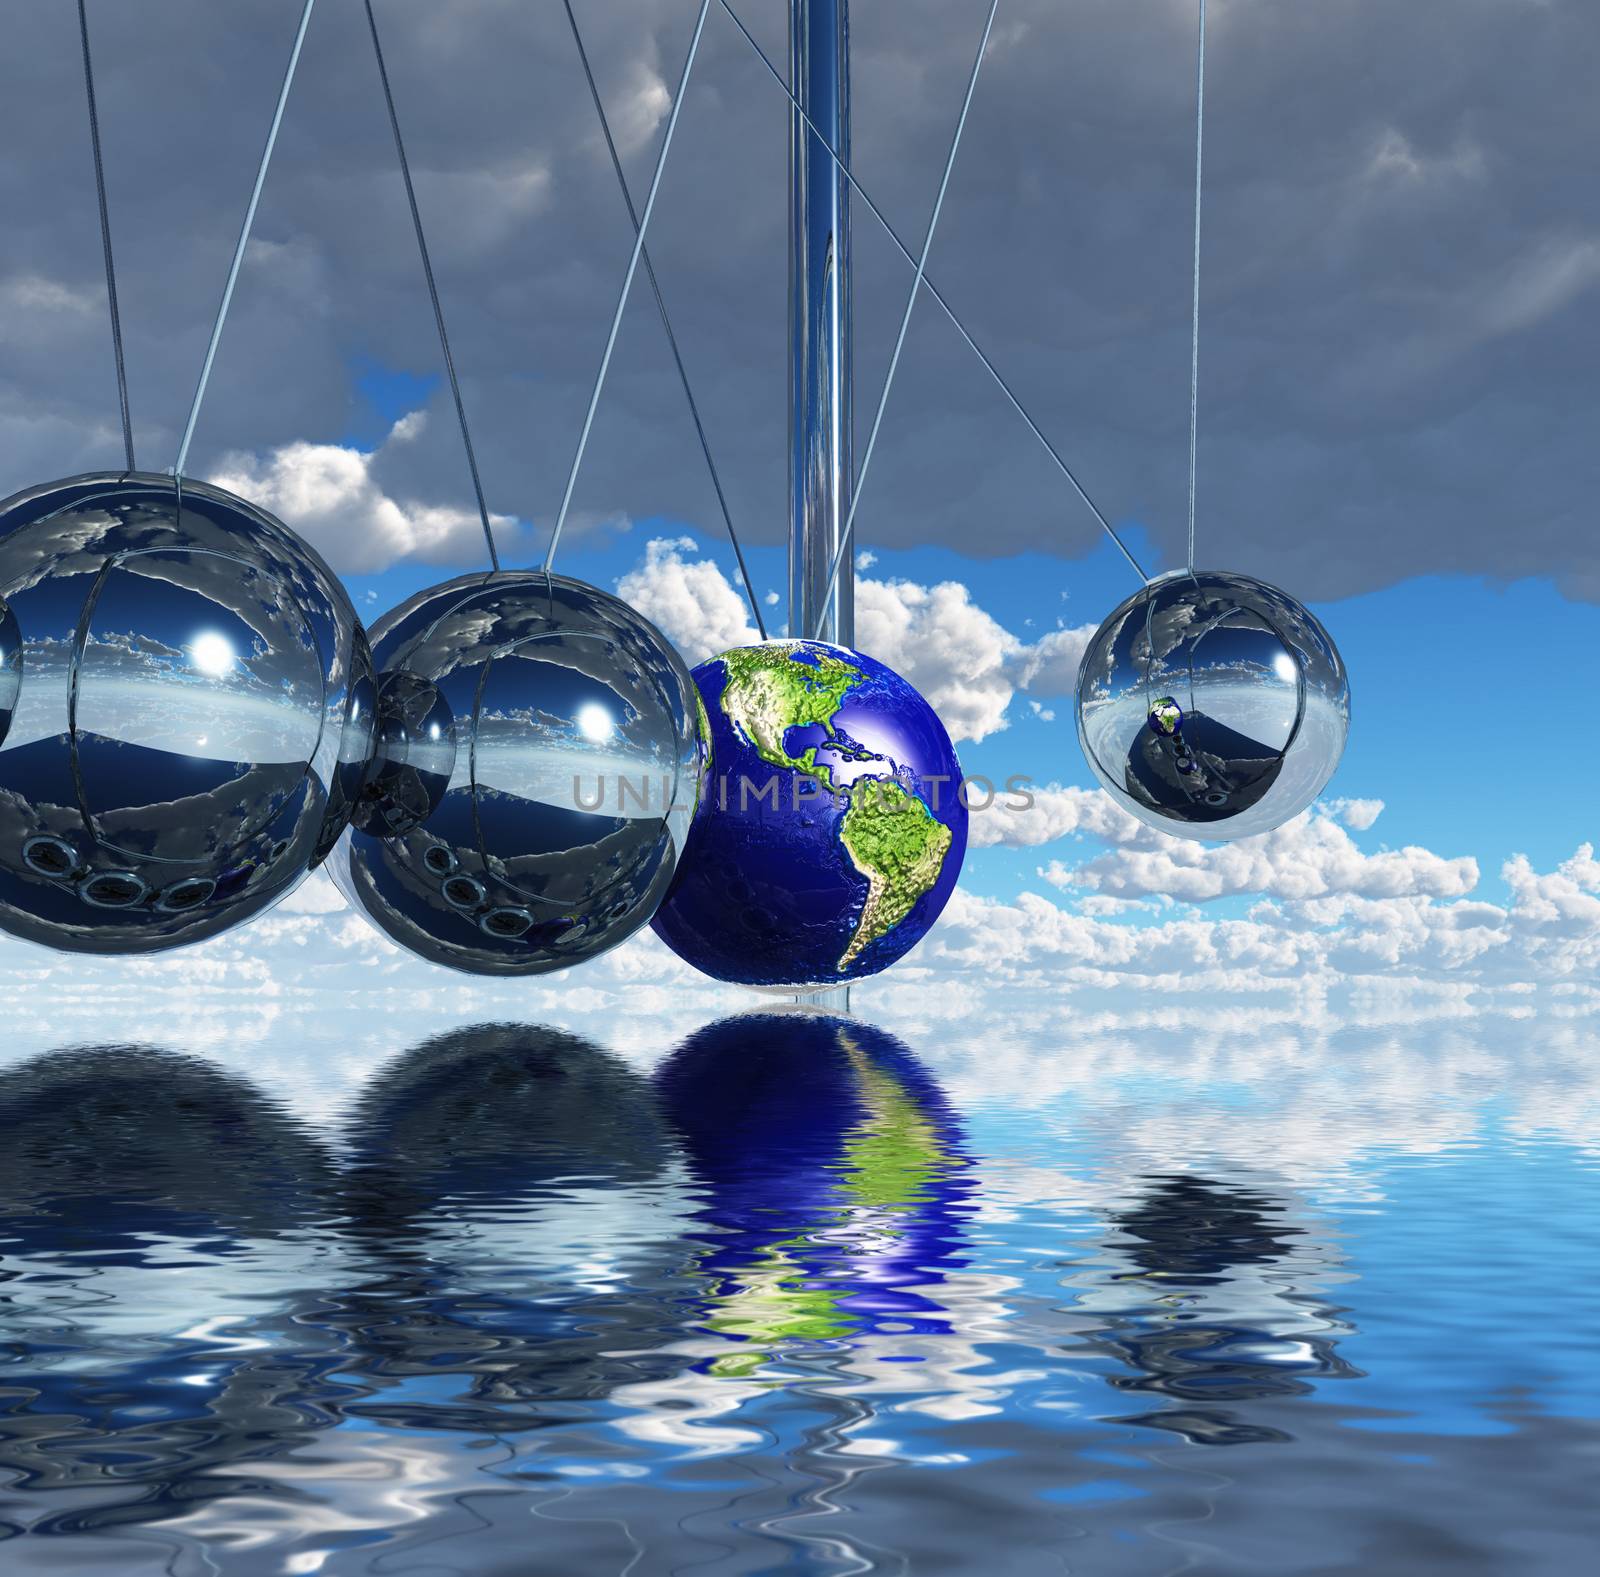 Surreal digital art. Newton's pendulum. One of the balls represents planet Earth.